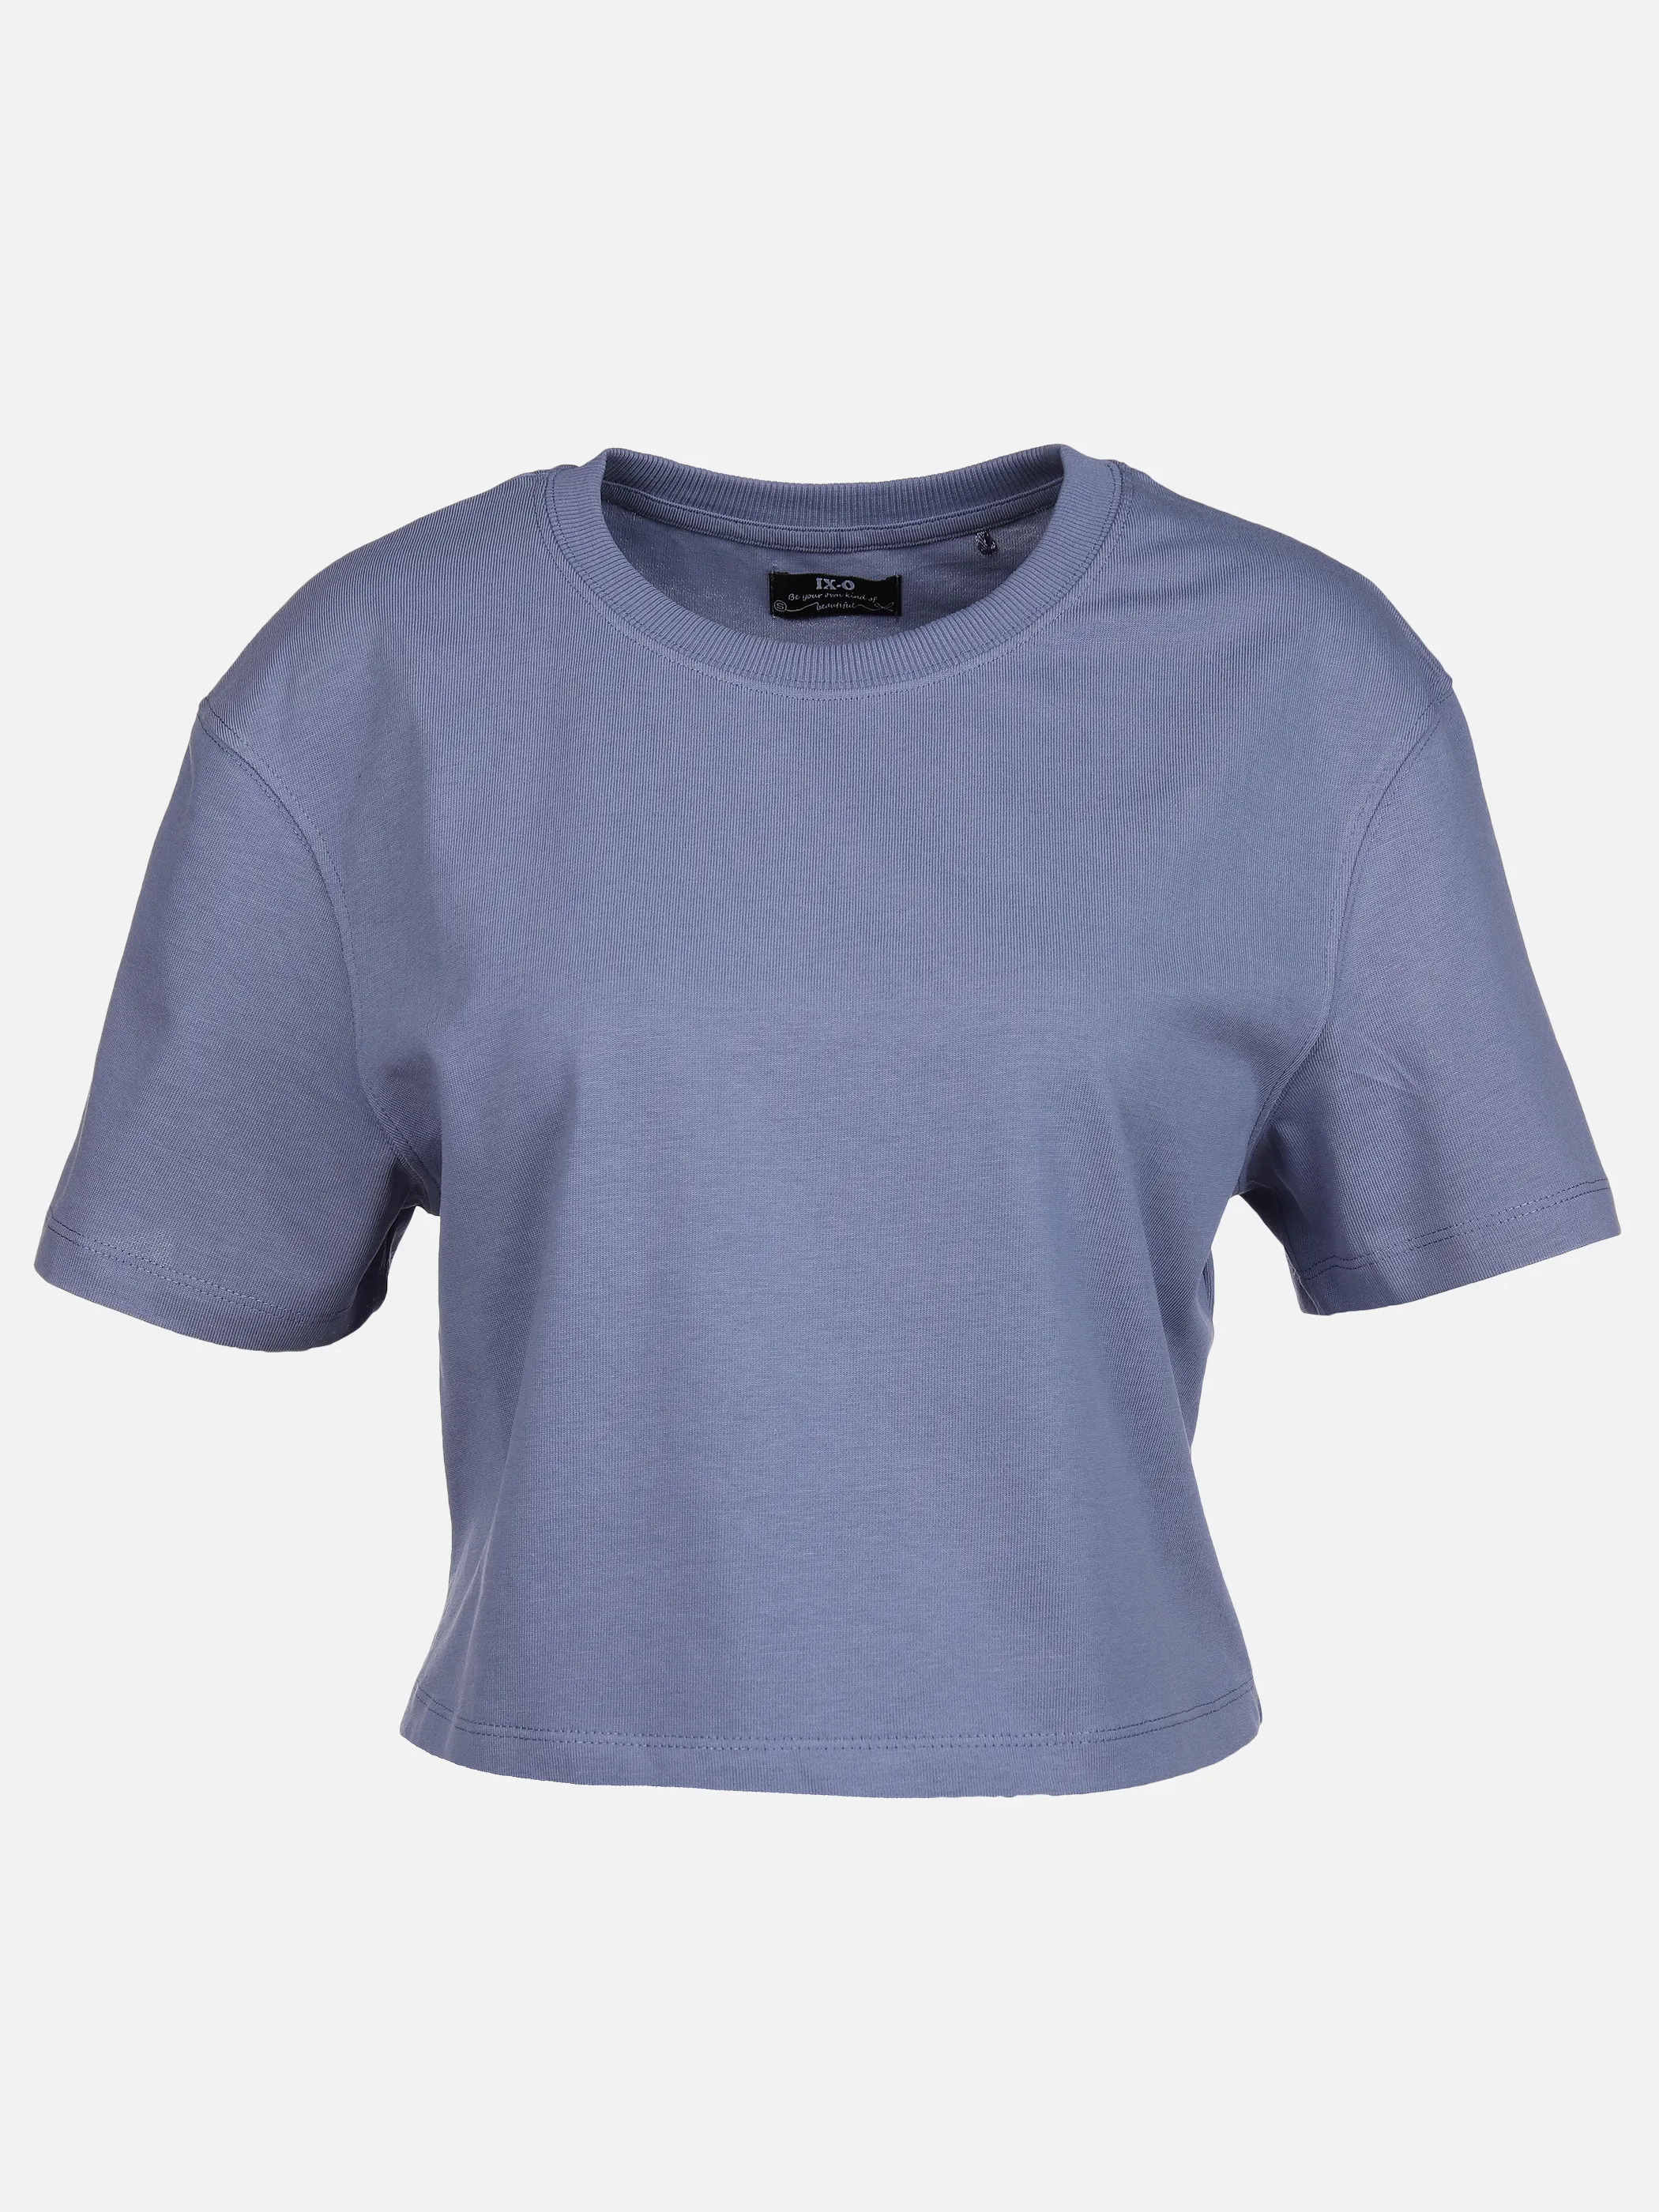 IX-O YF-Da T-Shirt Blau 890371 BLUE 1